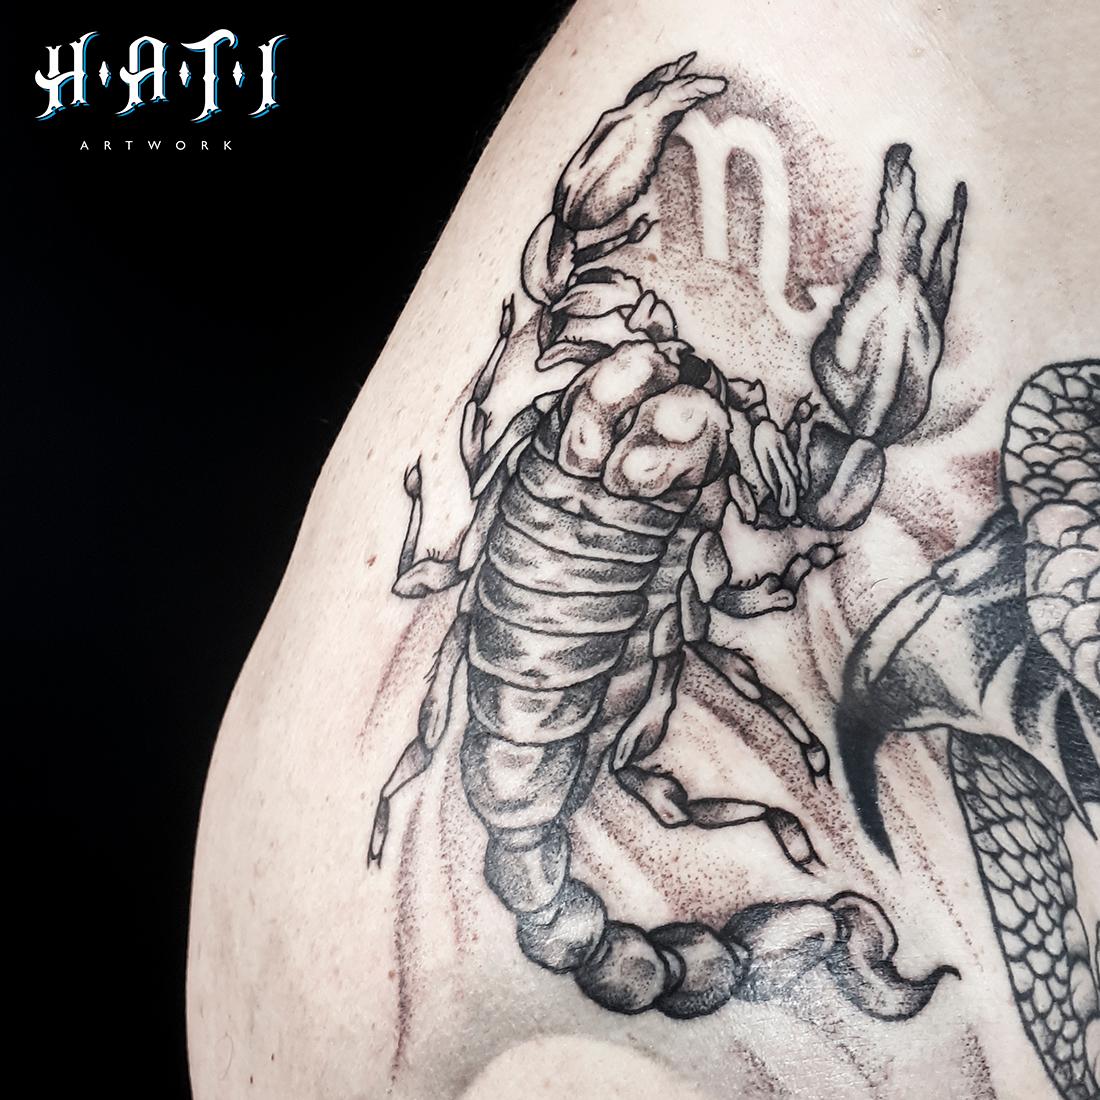 Inksearch tattoo Hati artwork